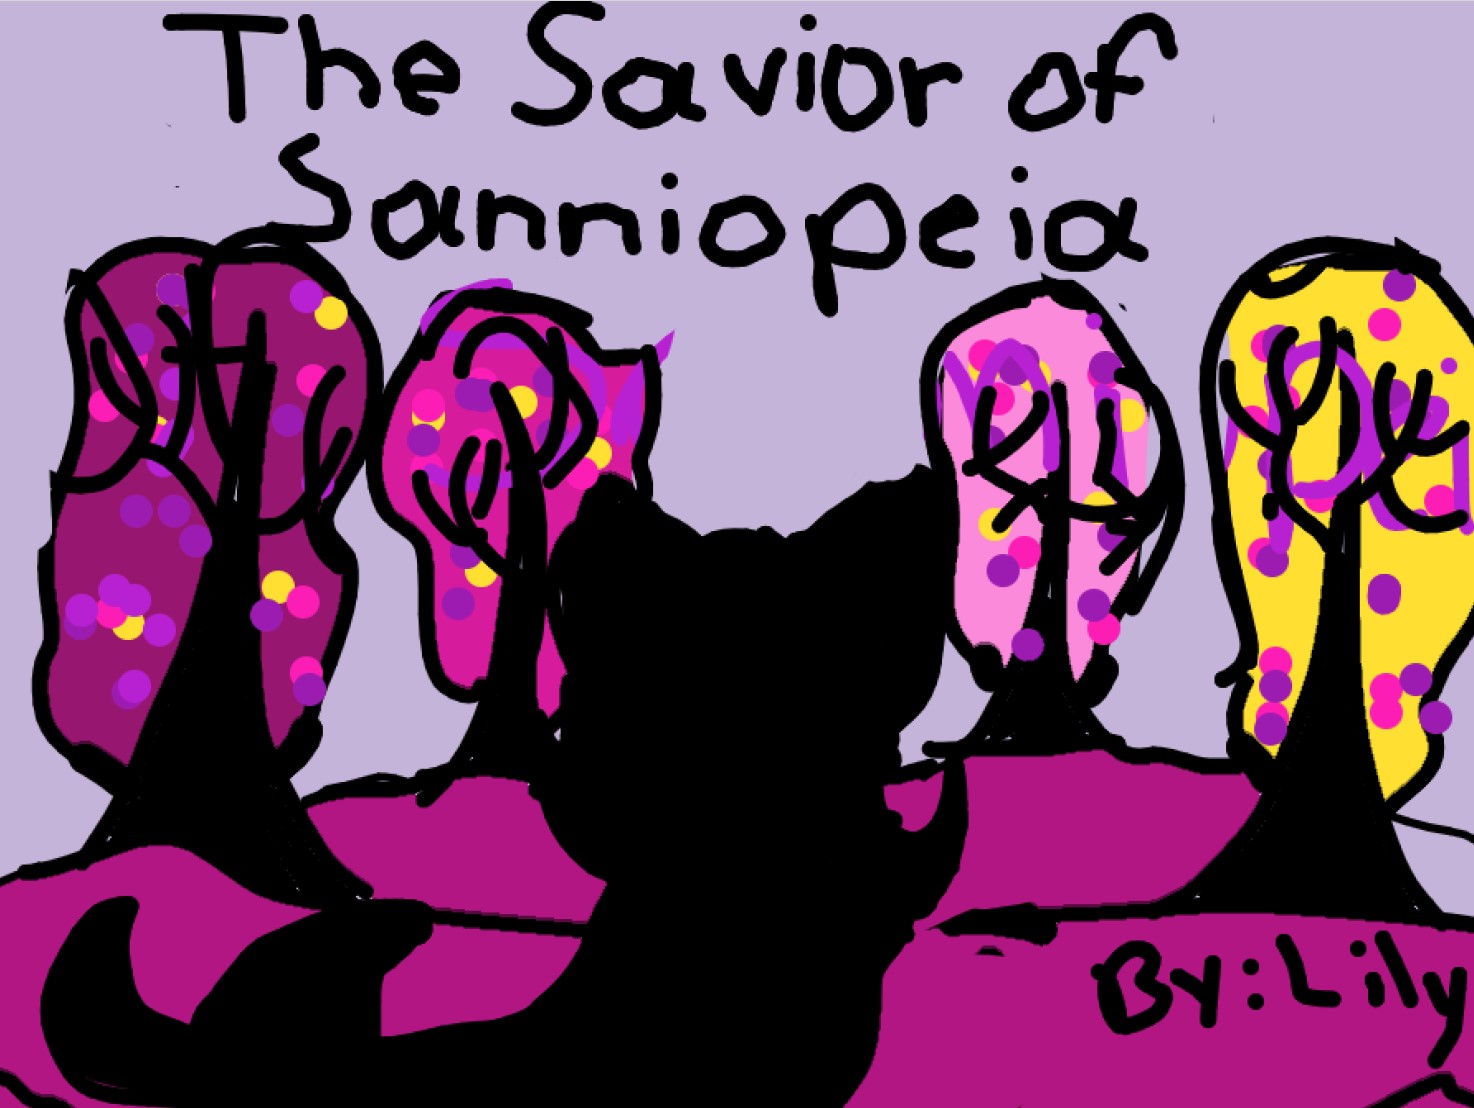 The Savior of Sanniopeia by Lilian S.